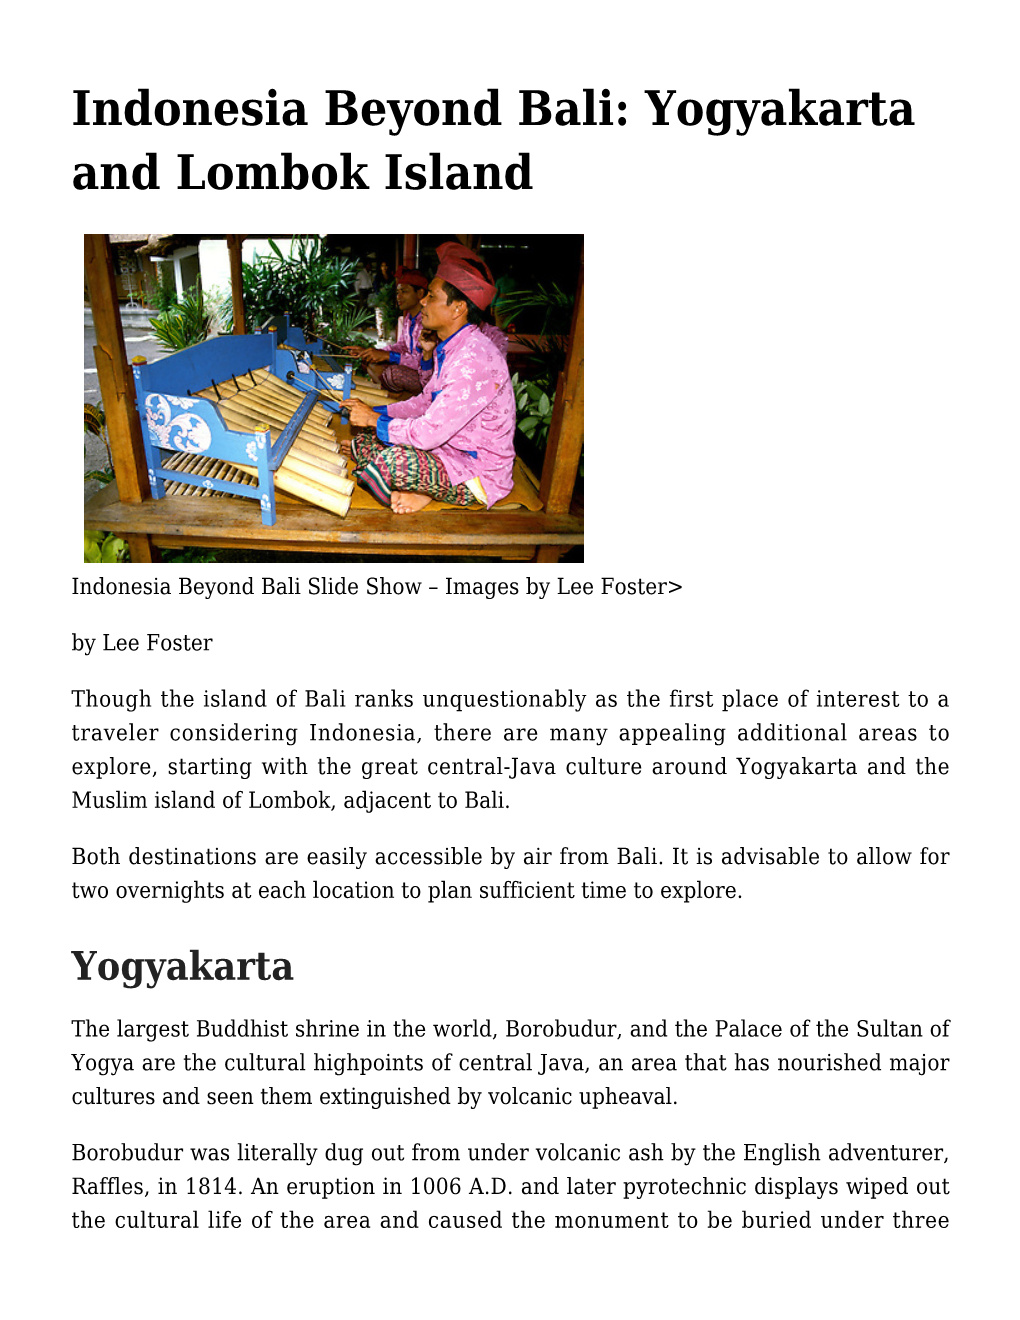 Indonesia Beyond Bali: Yogyakarta and Lombok Island